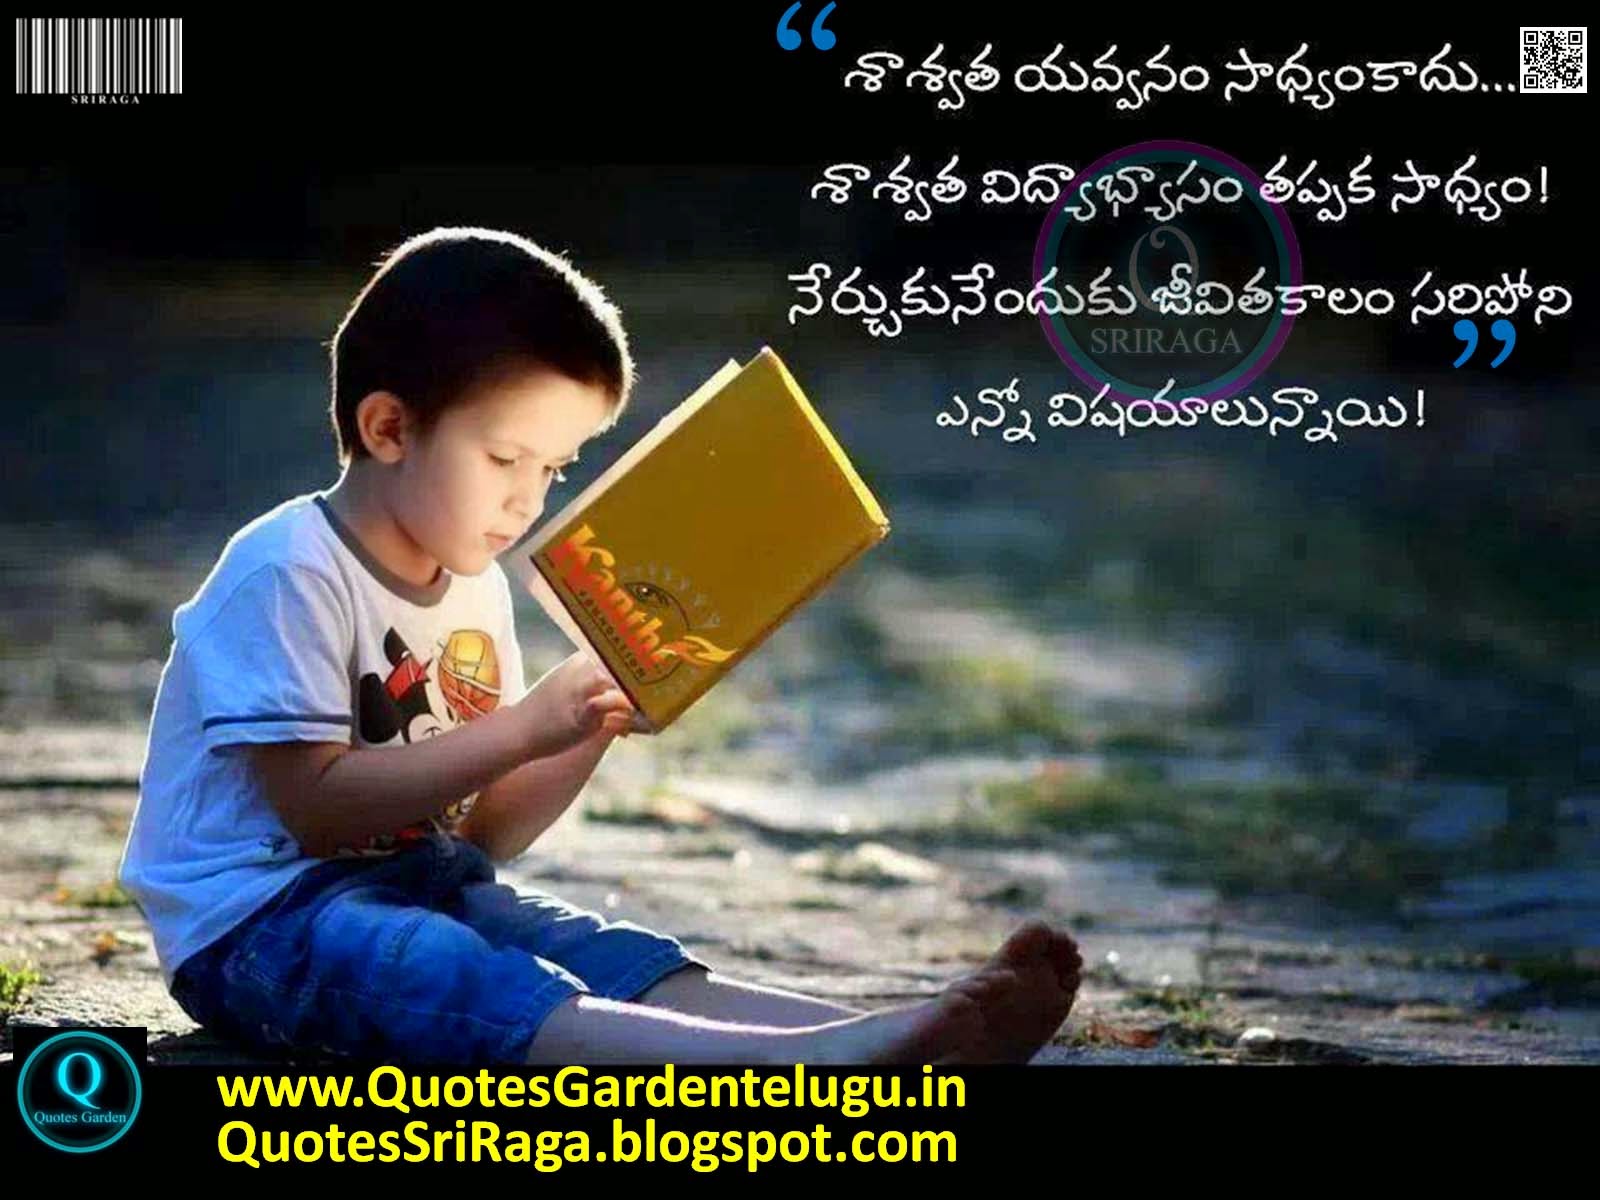 Famous Telugu Top Inspirational Quotes Goodreads images5 1600—1200 animutyalu